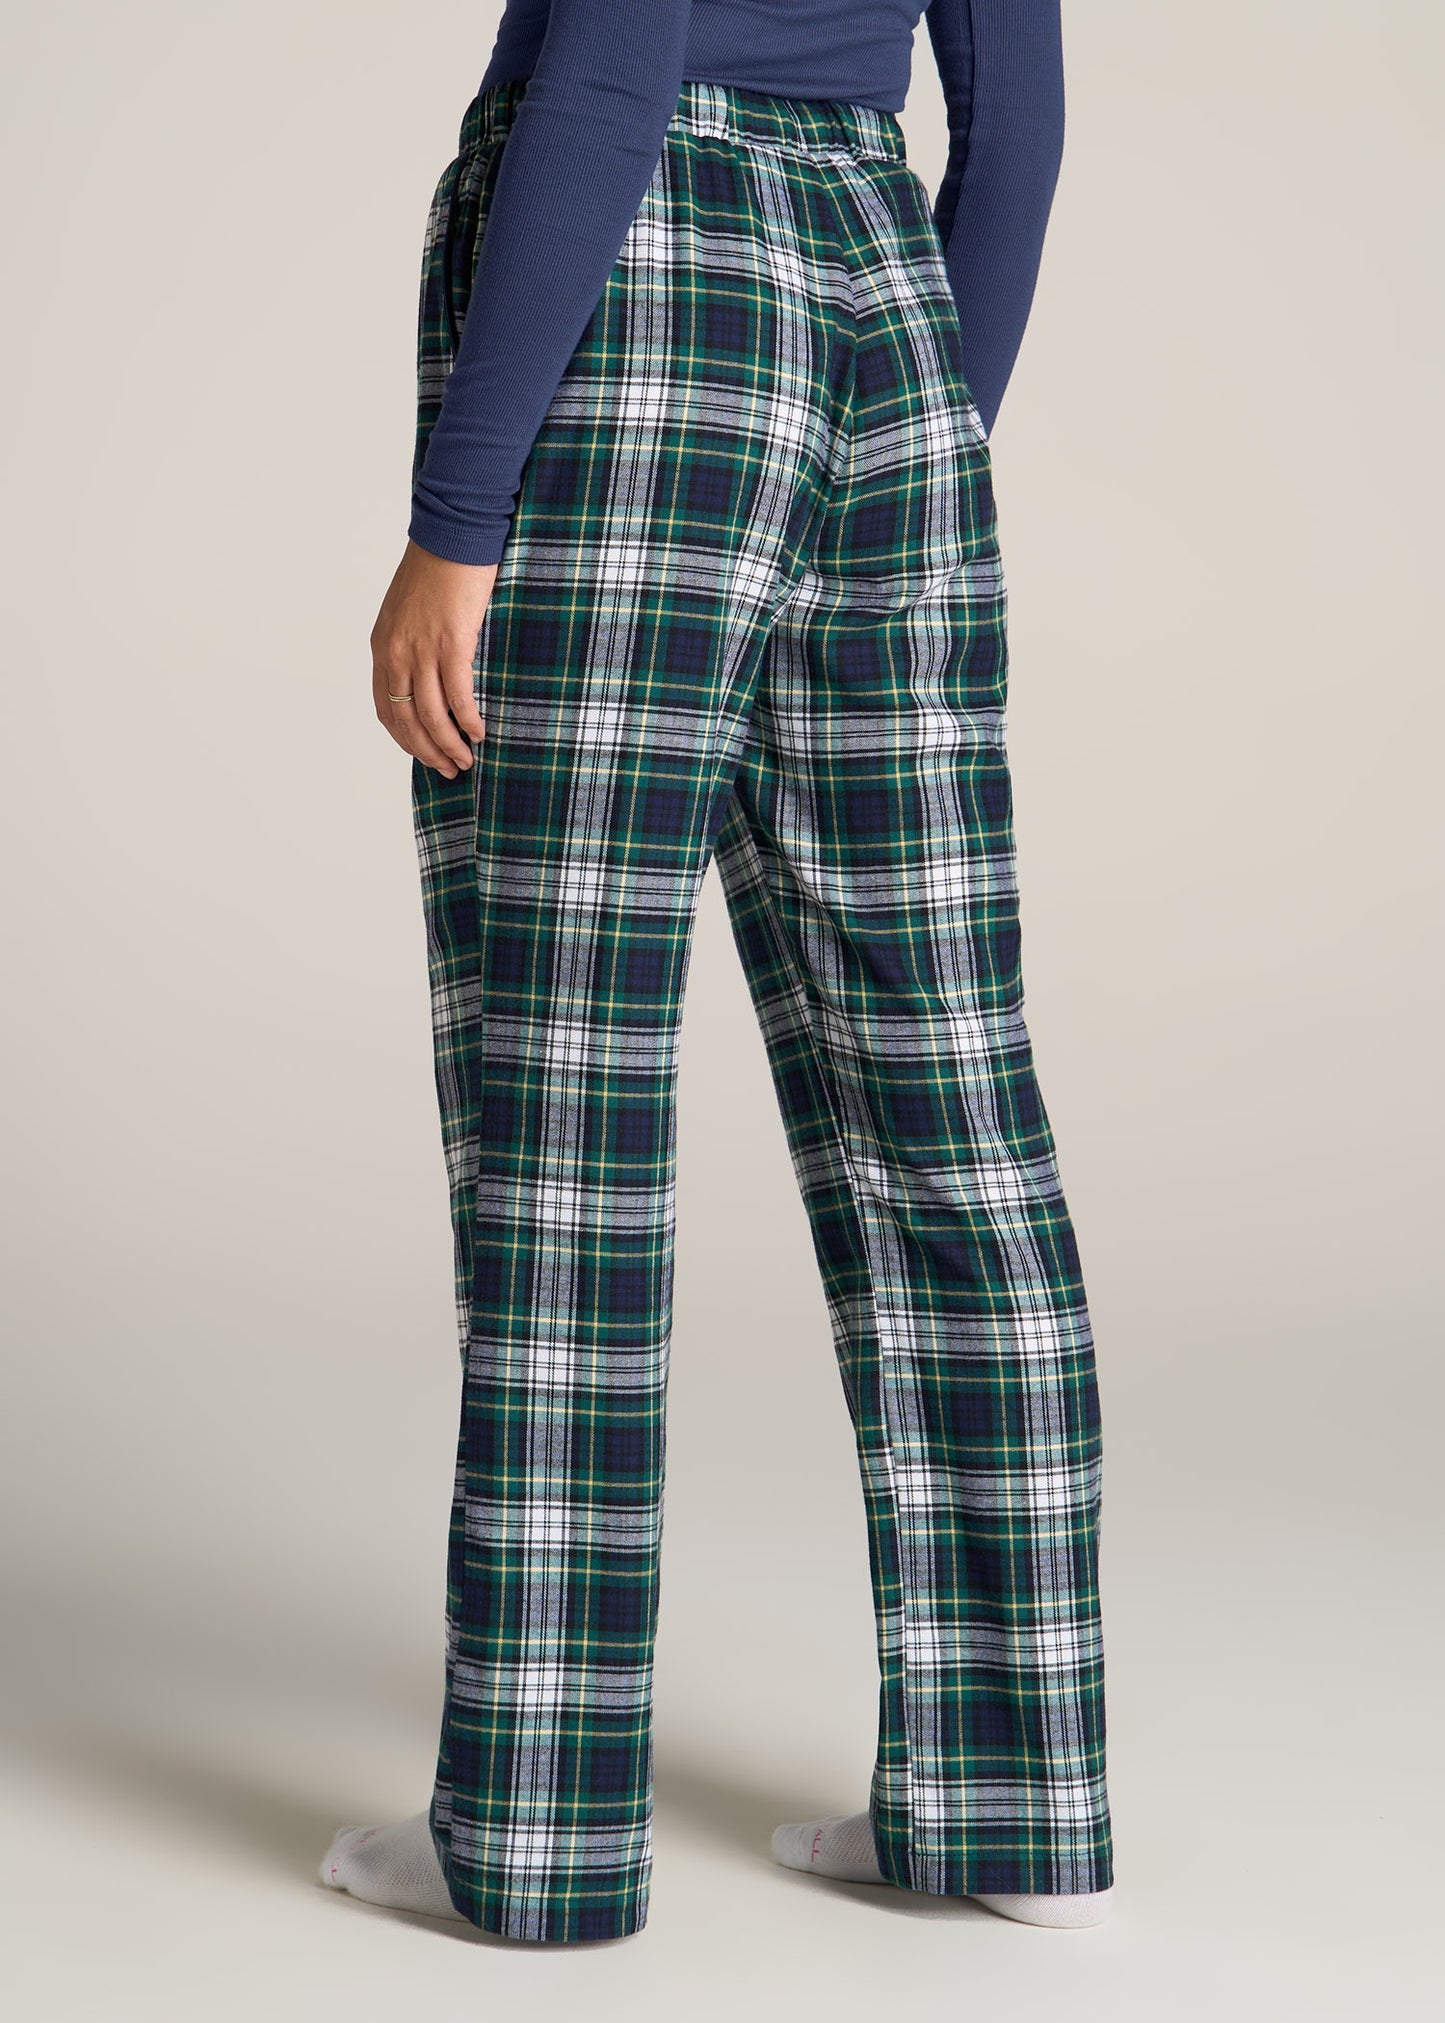 Women's Personalized Custom Print Flannel Pajama Pants | Zynotti